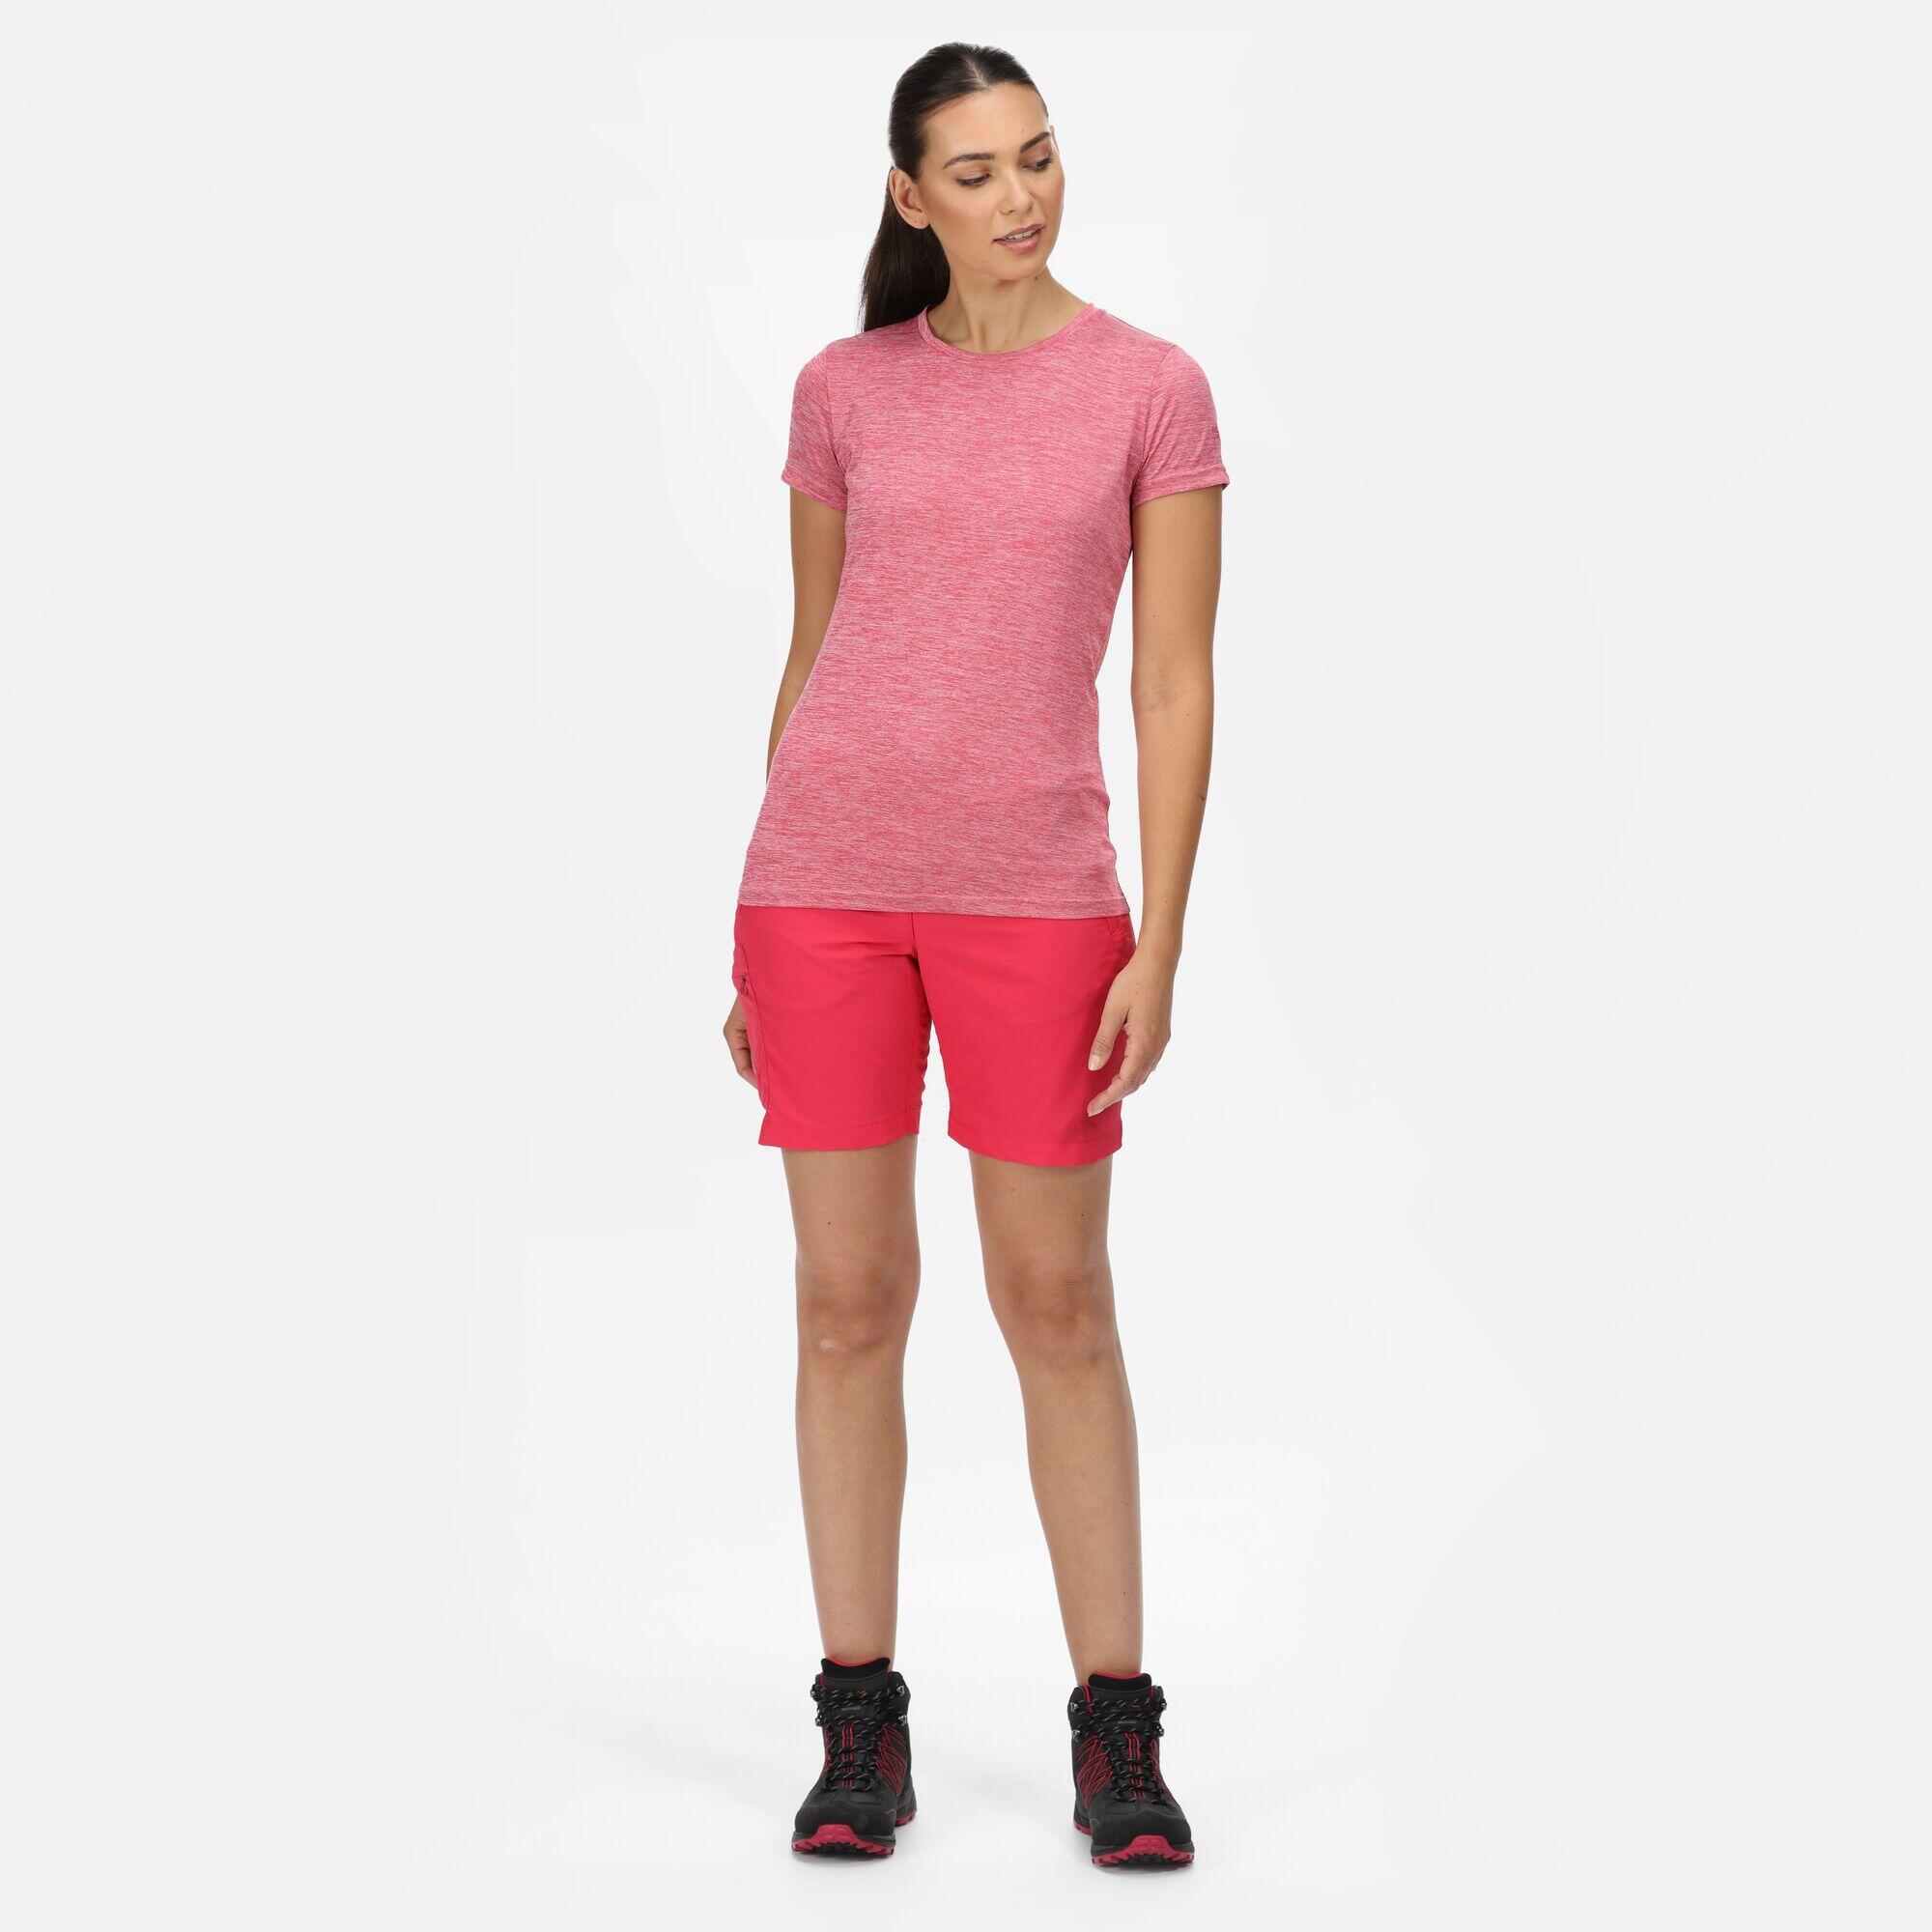 Chaska II Women's Hiking Shorts - Rethink Pink 3/6